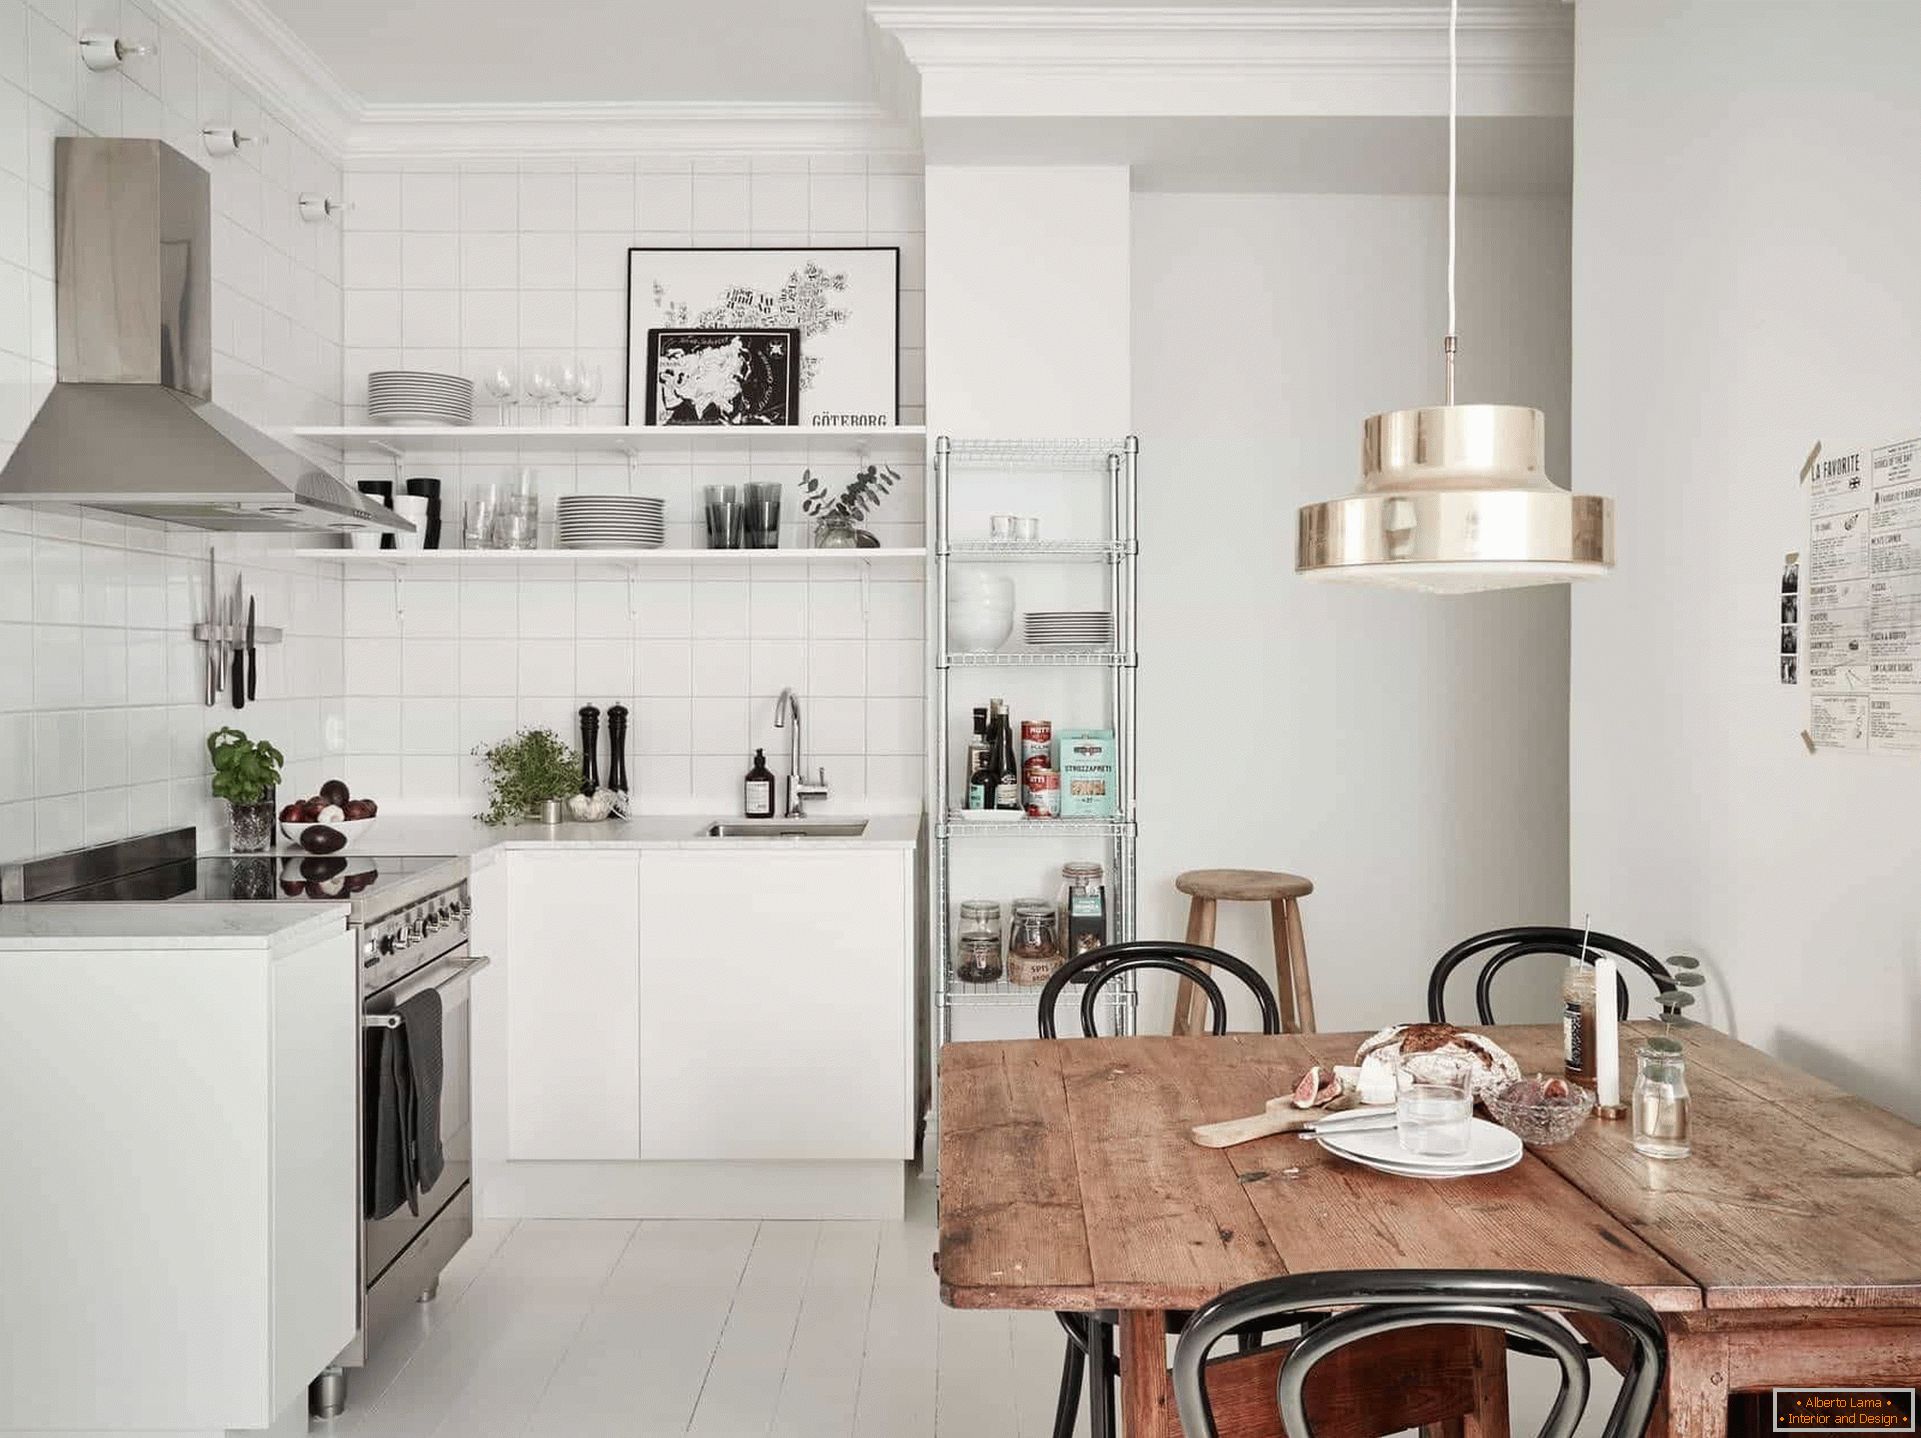 Kitchen decor in Scandinavian style